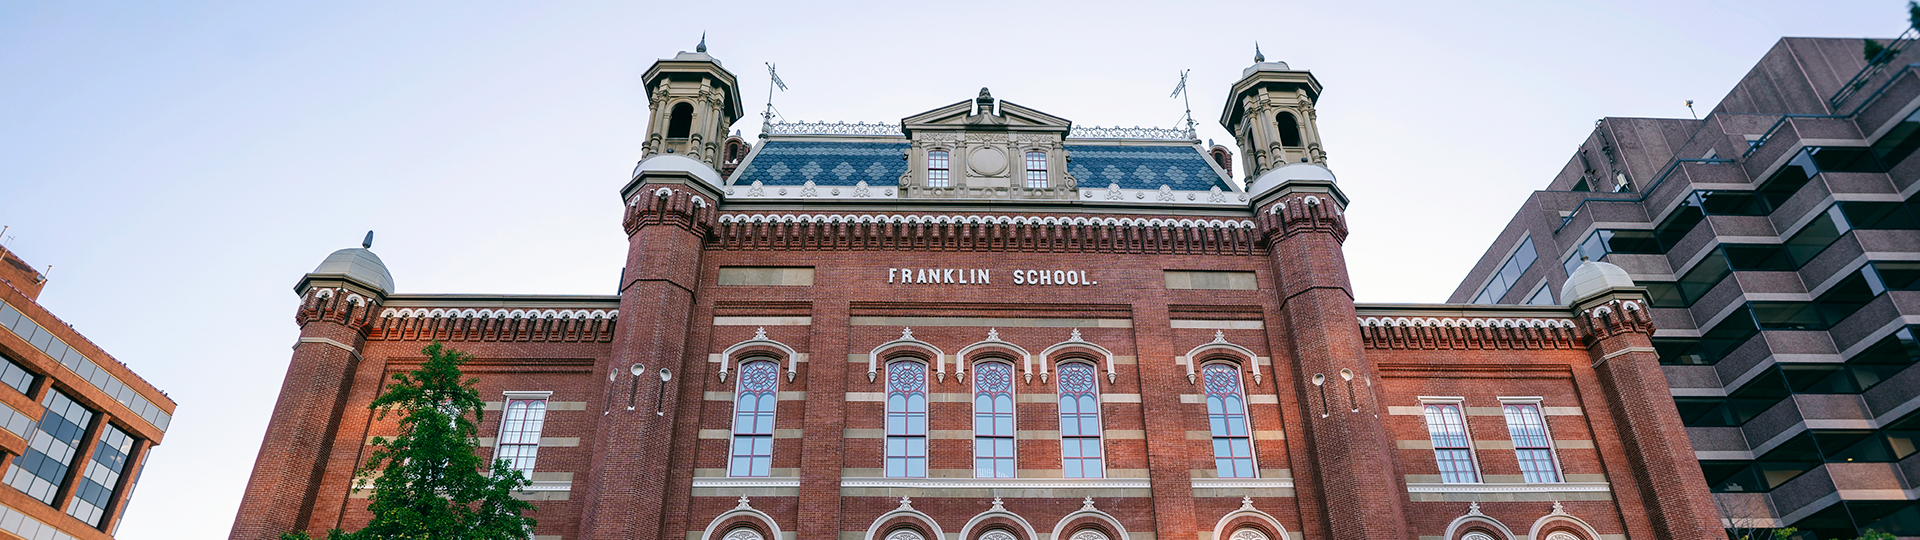 Franklin School, Heimat des Planet Word Museums